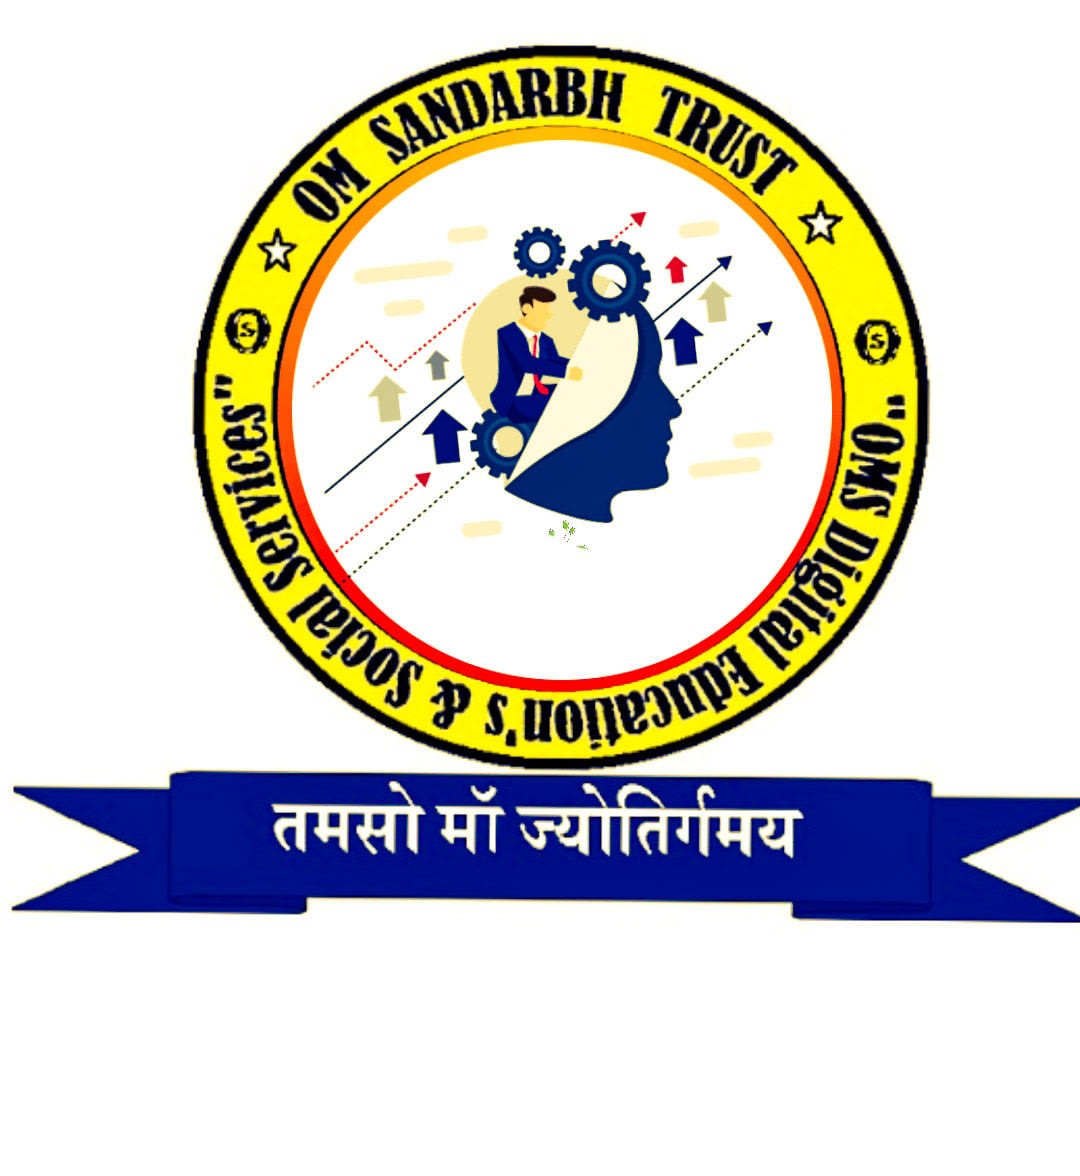 Om Sandarbh Trust